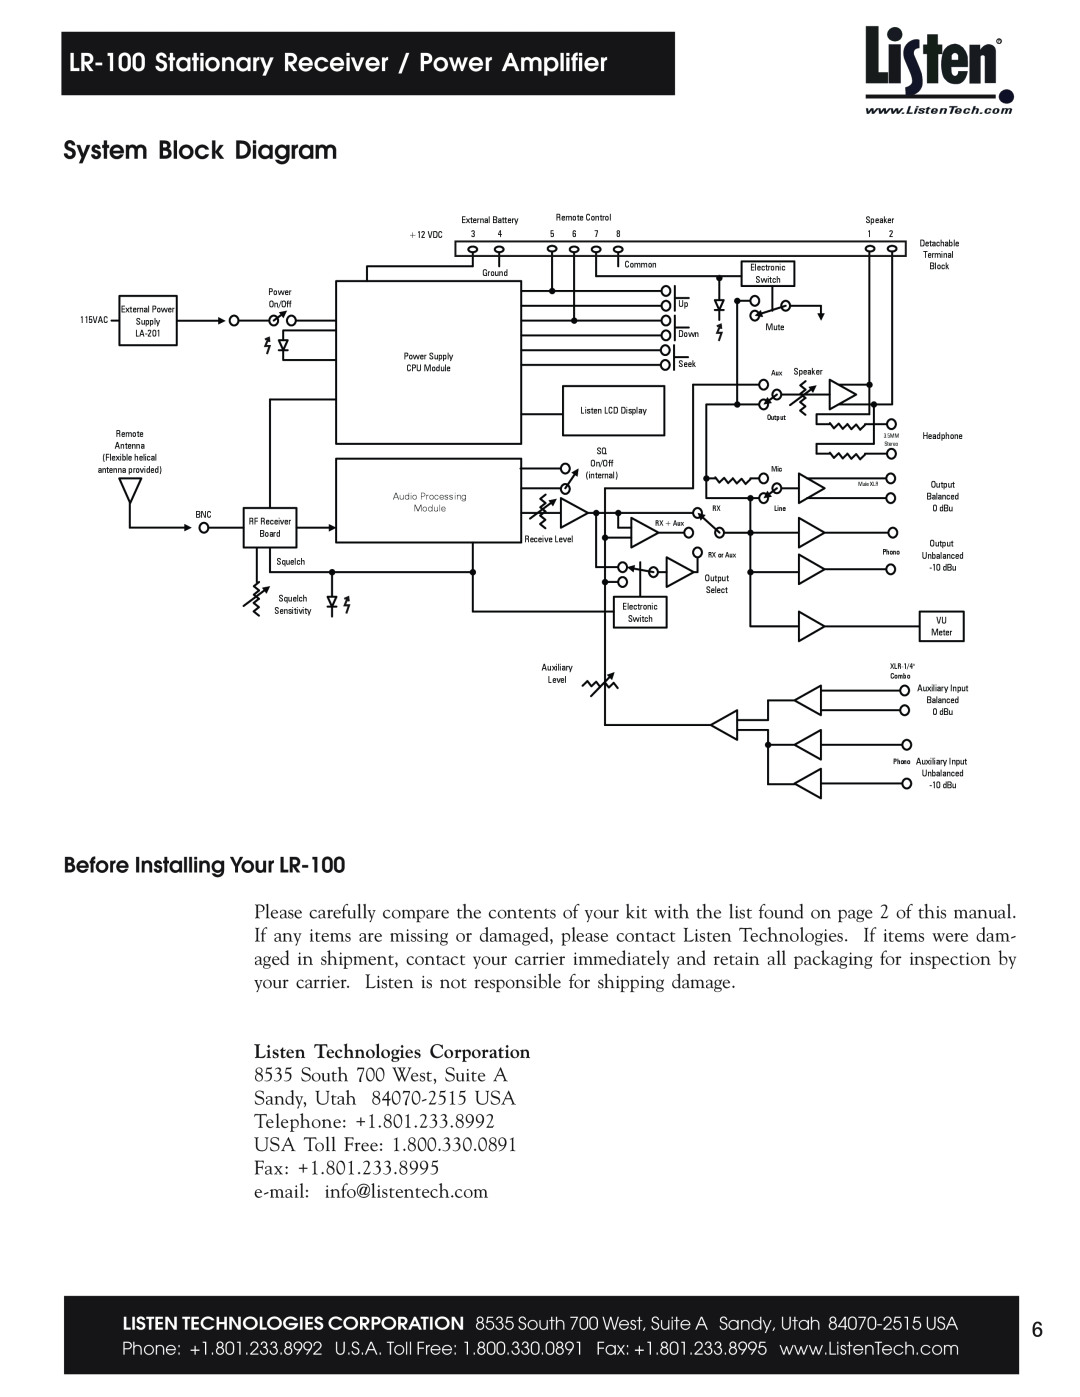 Listen Technologies System Block Diagram, Before Installing Your LR-100, LR-100Stationary Receiver / Power Amplifier 